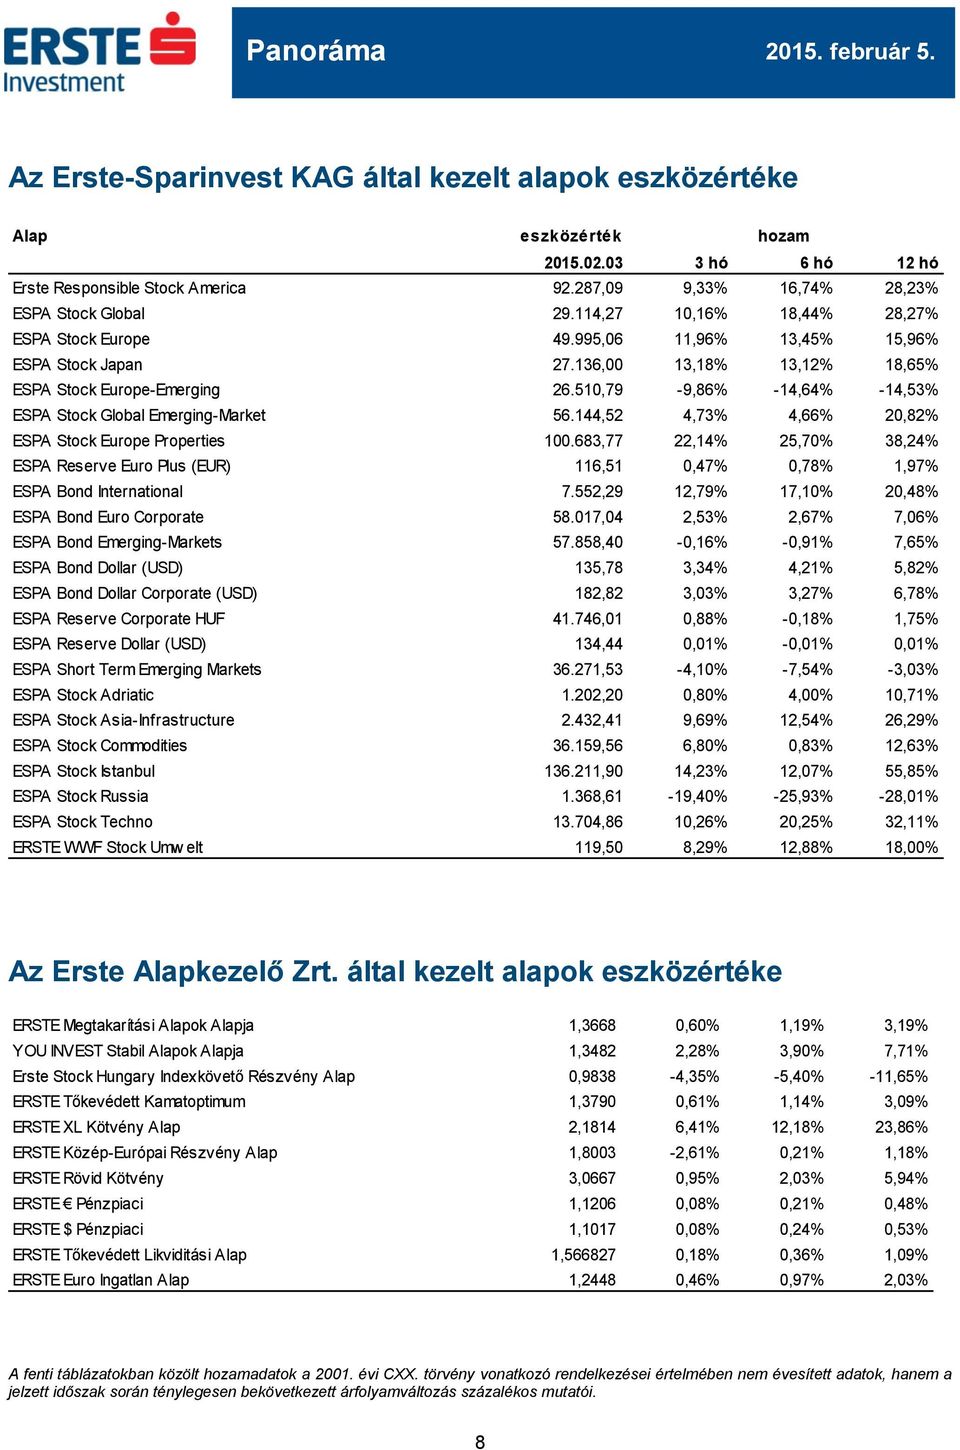 510,79-9,86% -14,64% -14,53% ESPA Stock Global Emerging-Market 56.144,52 4,73% 4,66% 20,82% ESPA Stock Europe Properties 100.